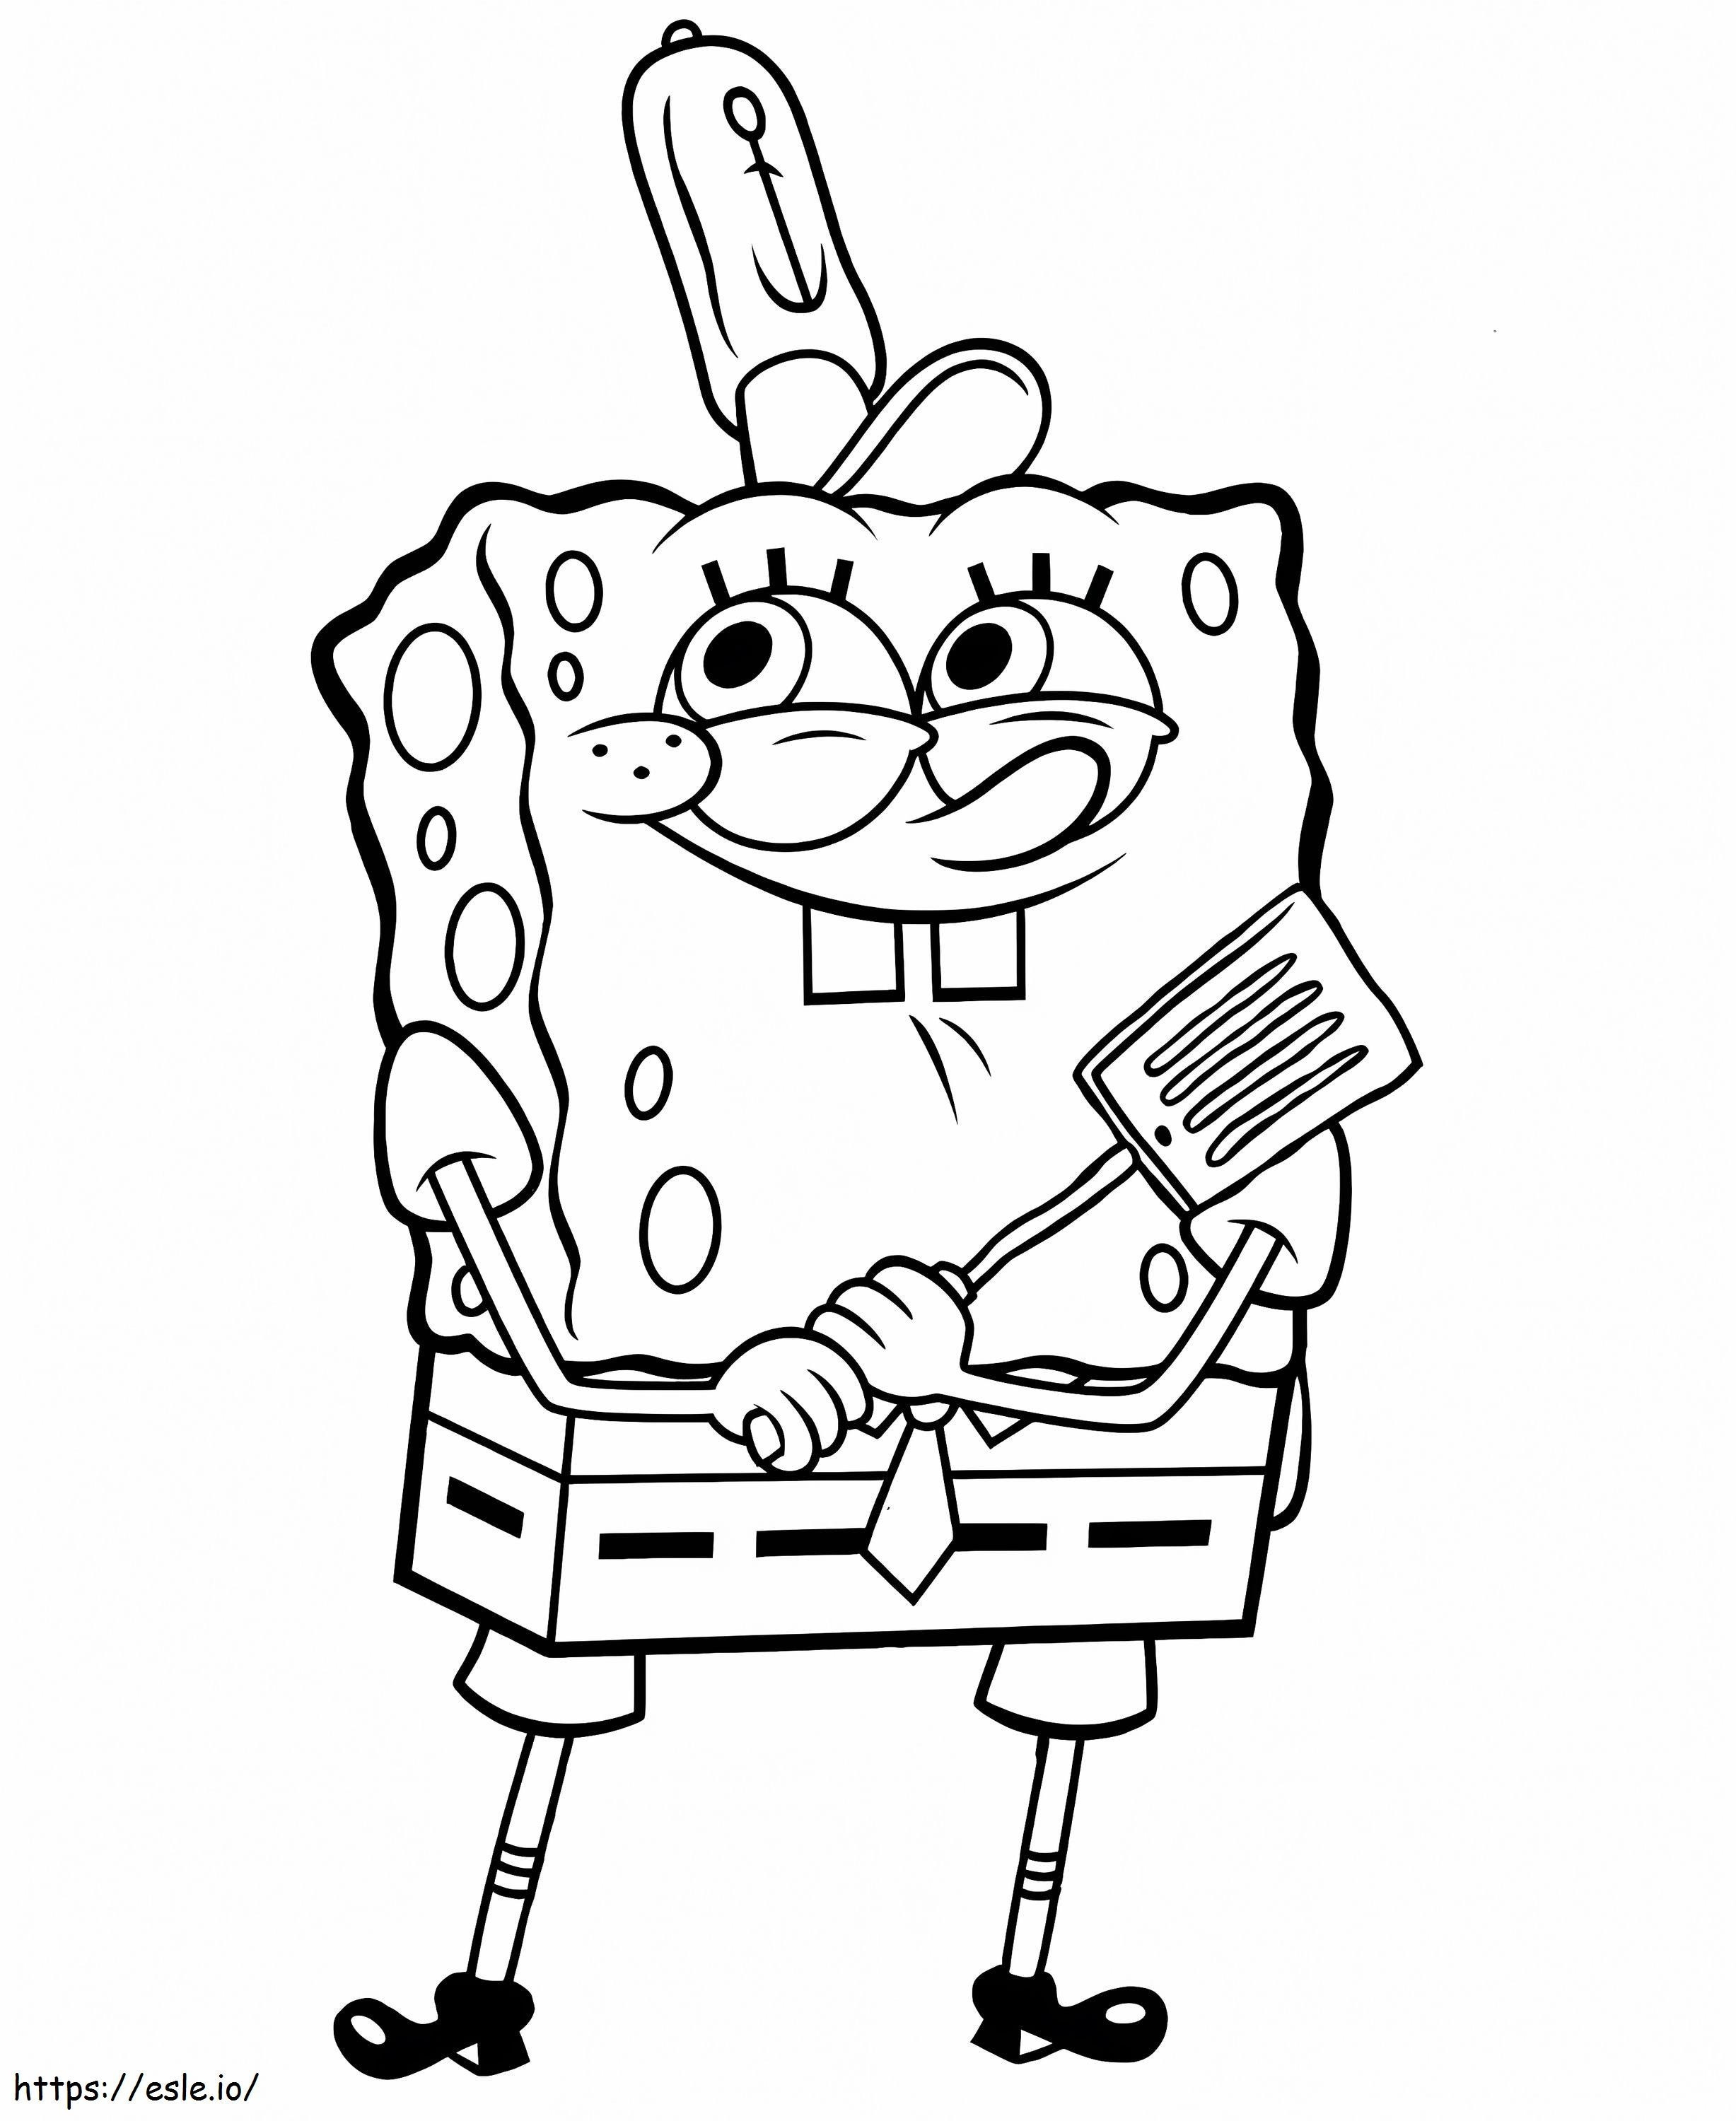 Boss SpongeBob coloring page